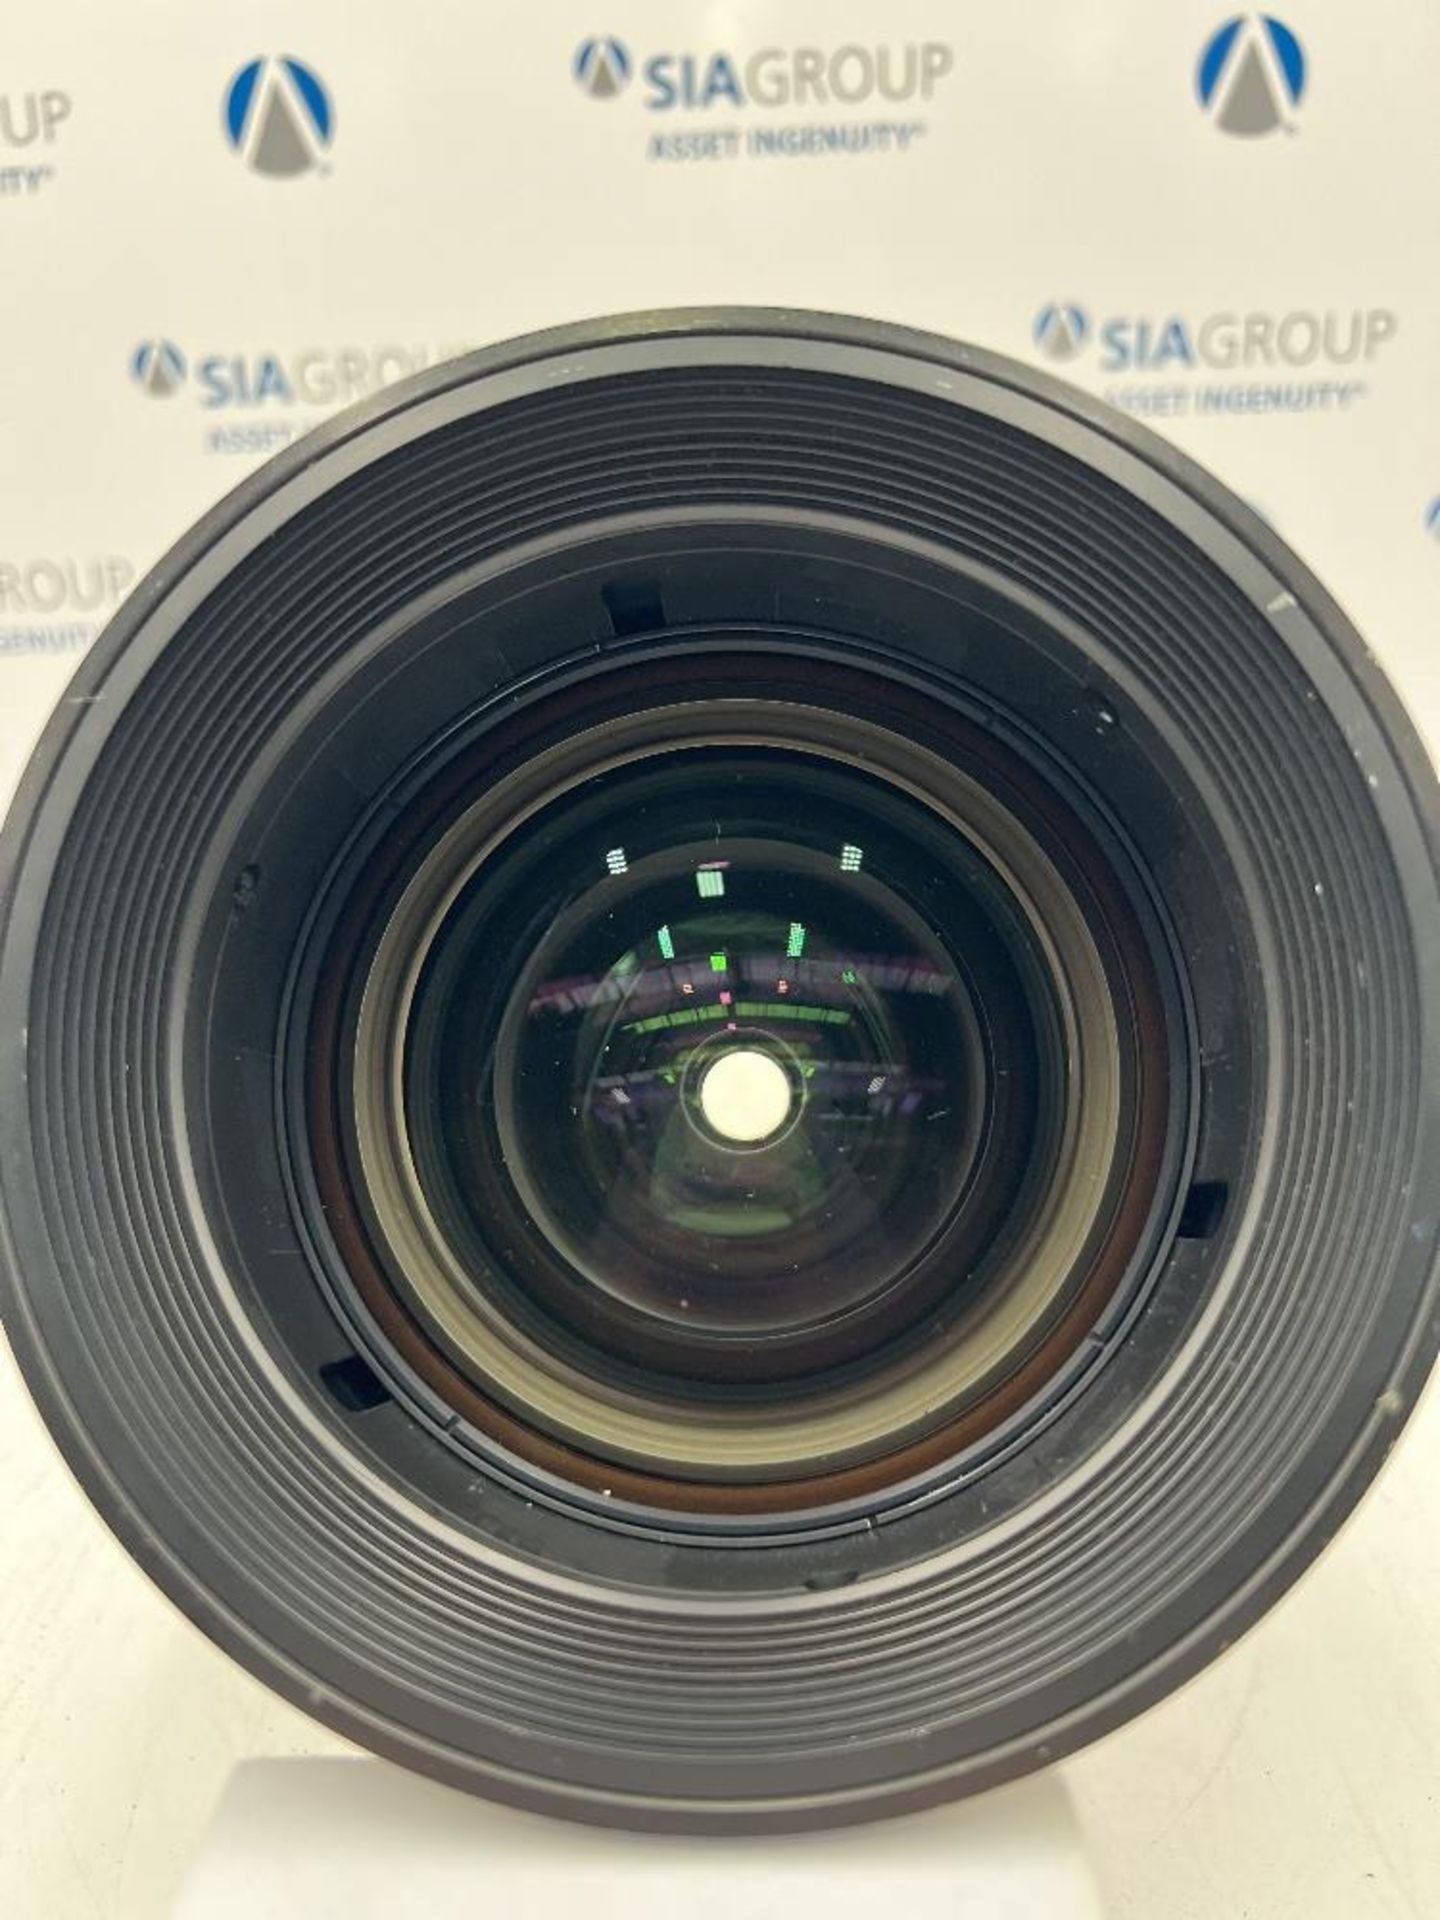 Panasonic ET-D75LE10 1.3-1.7 Zoom Lens With Carrier Case - Image 6 of 10